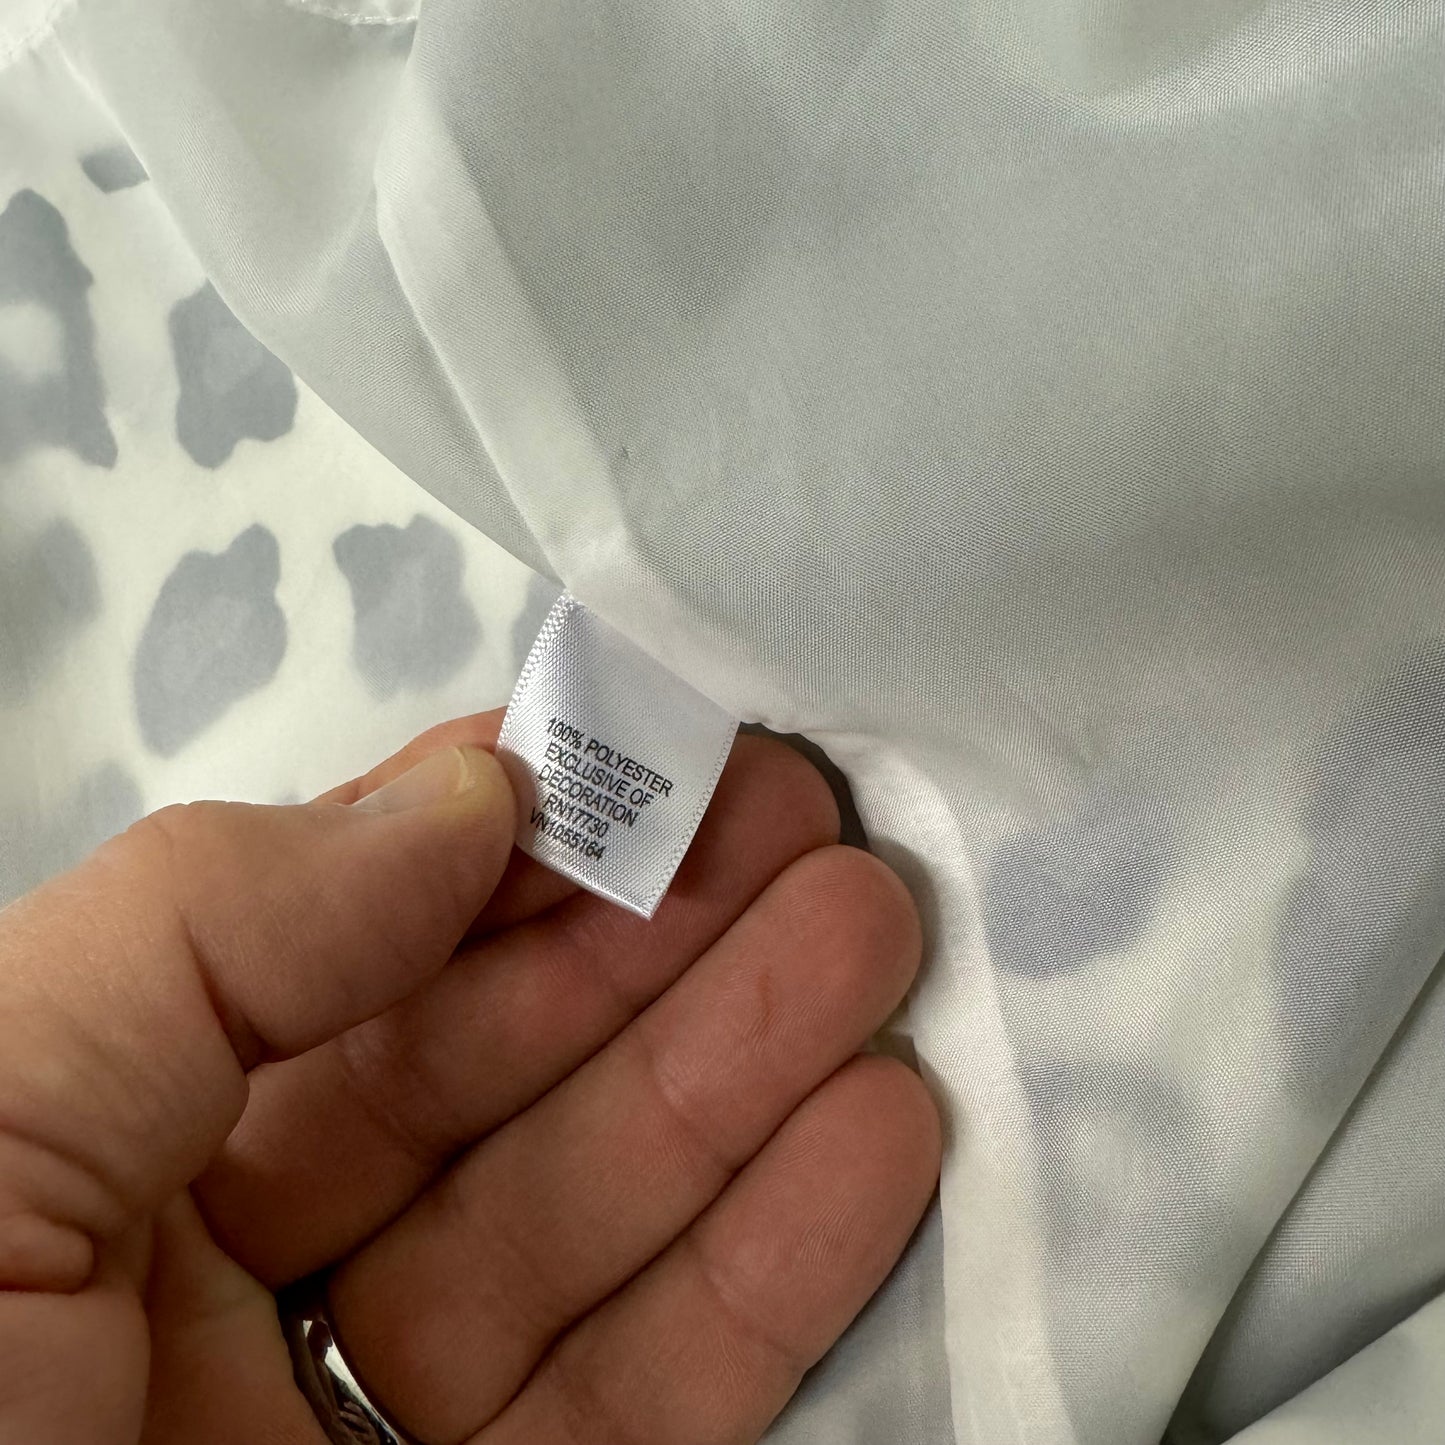 Merona | Womens Leopard Print A-Line Dress | Color: White/Black | Size: 14 | Pre-Owned